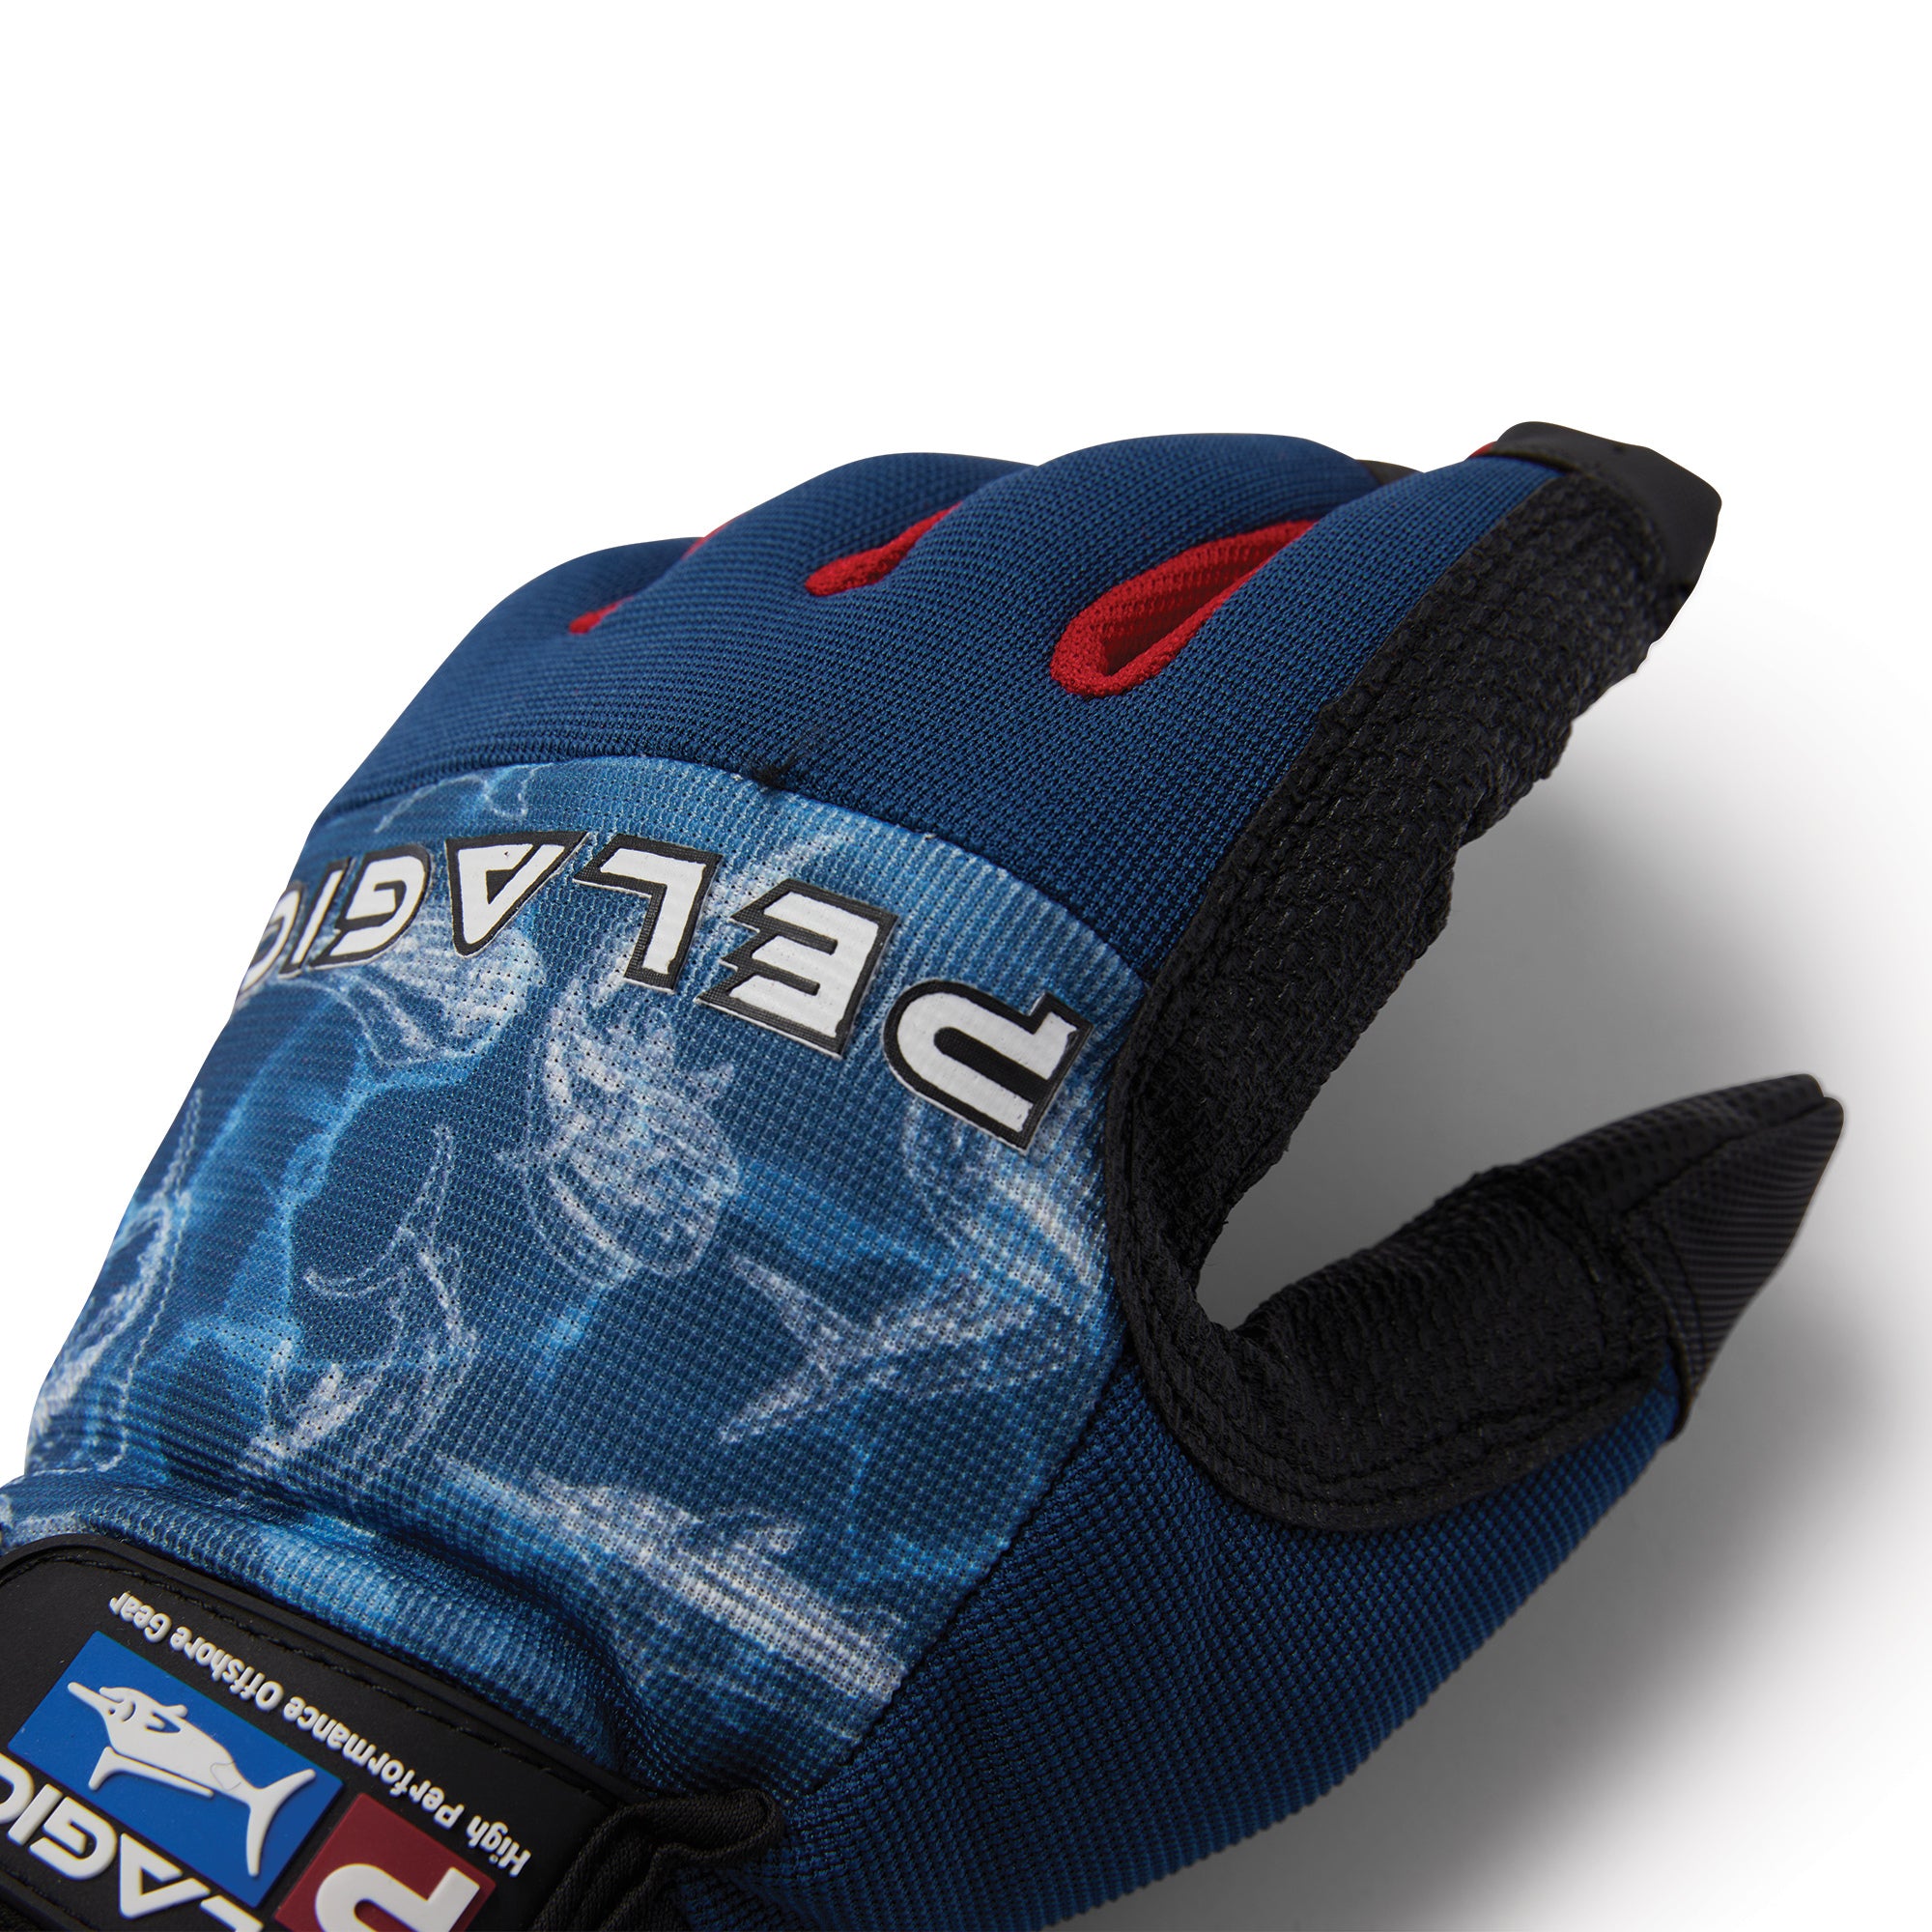 Pelagic Battle Gloves